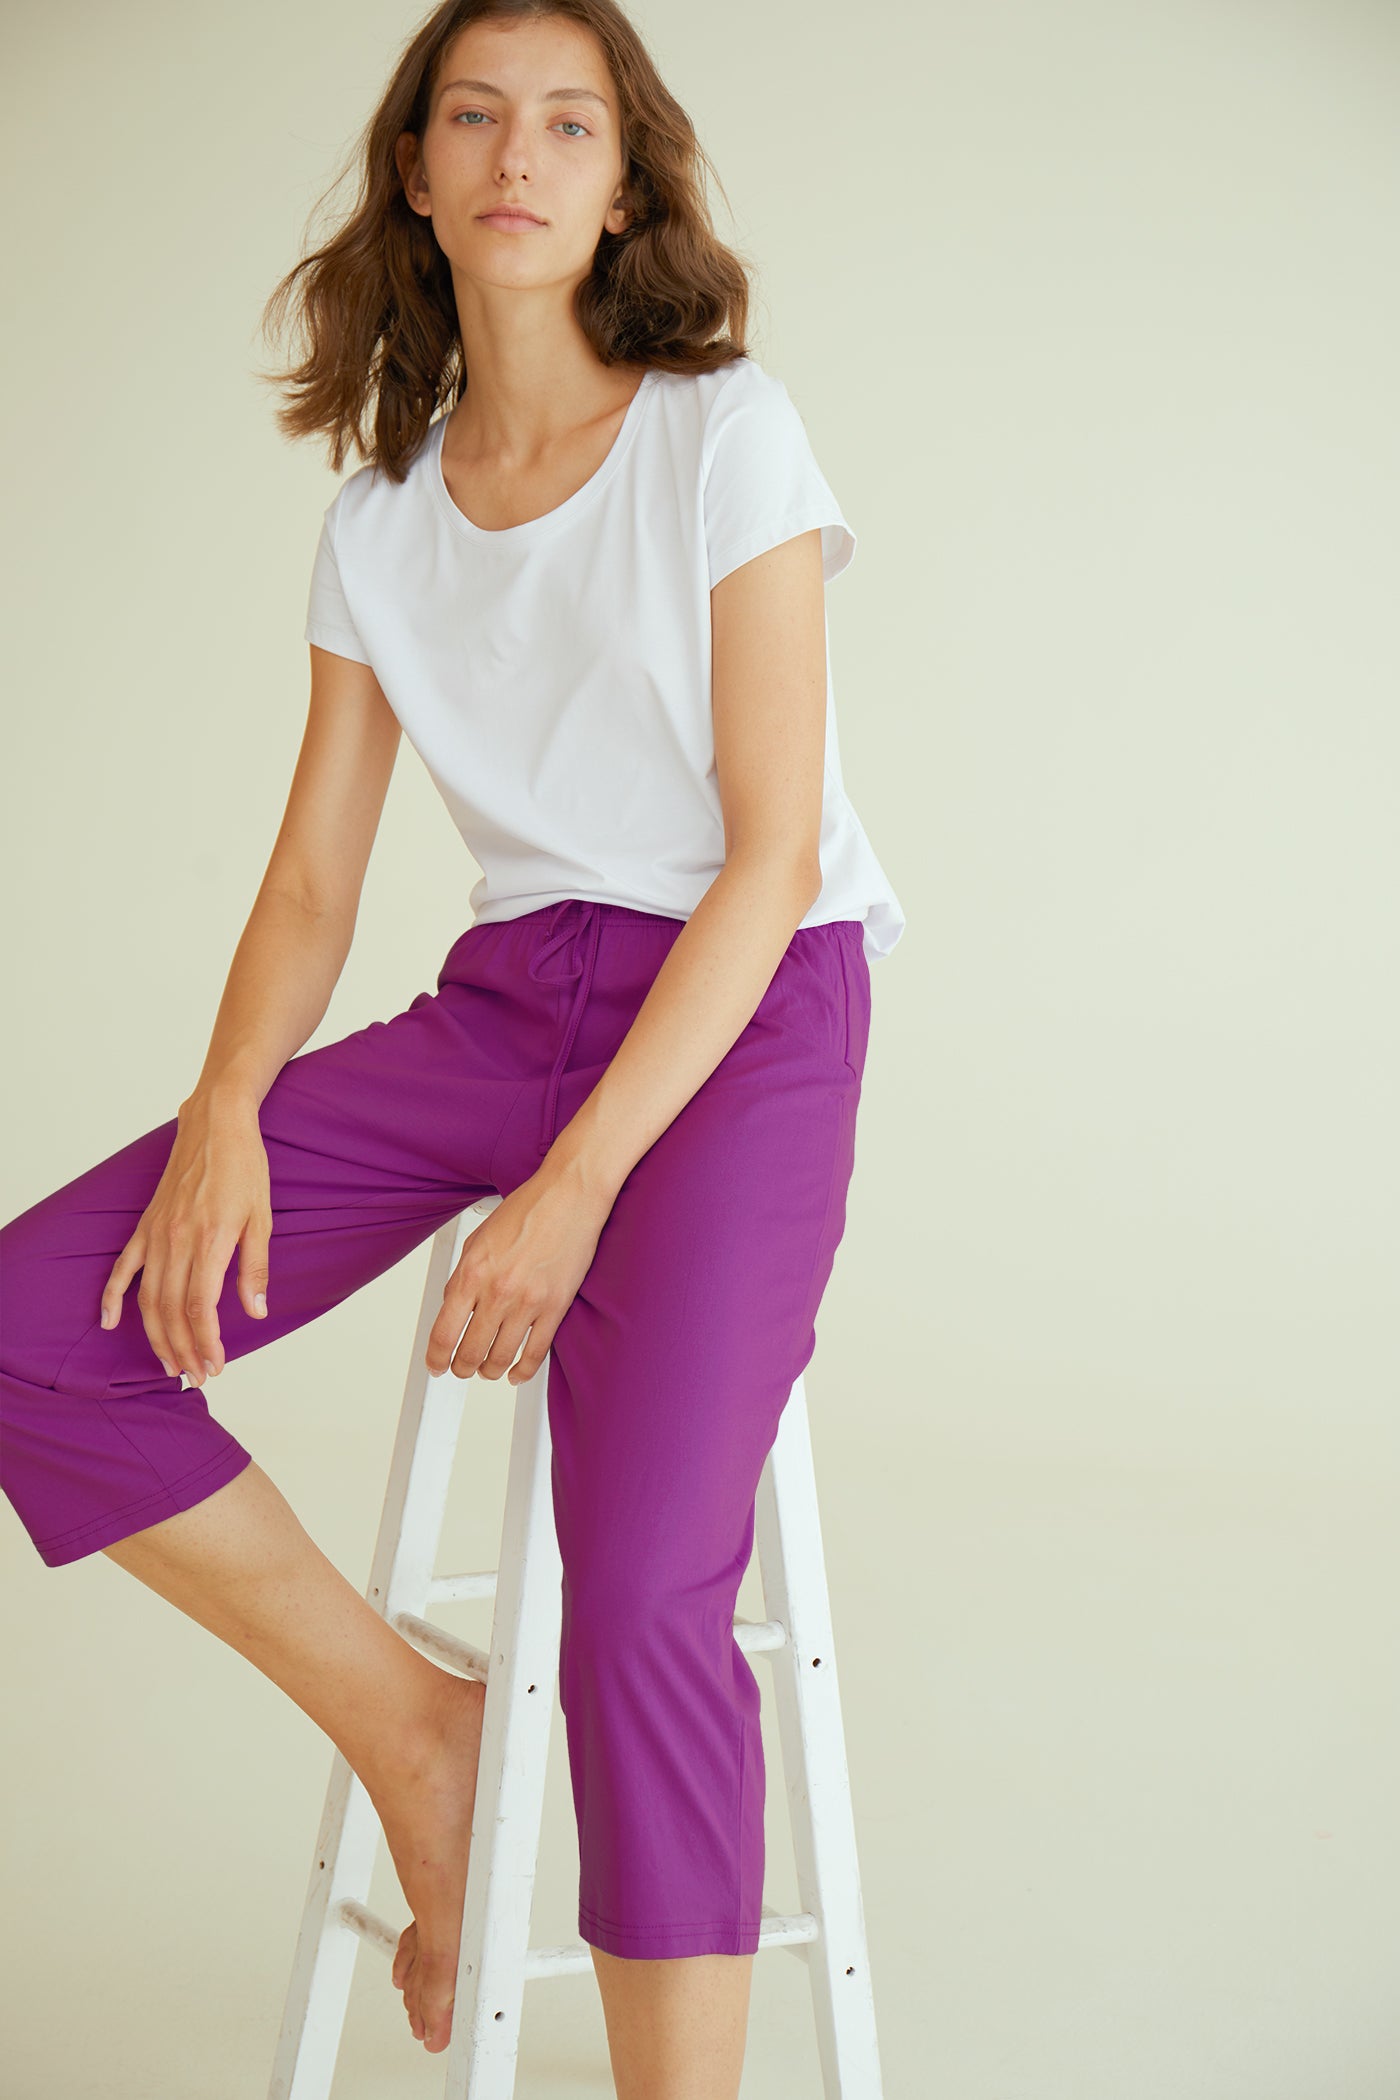 Buy LEXISLOVE Capris for Women Casual Summer Wide Leg Crop Pants